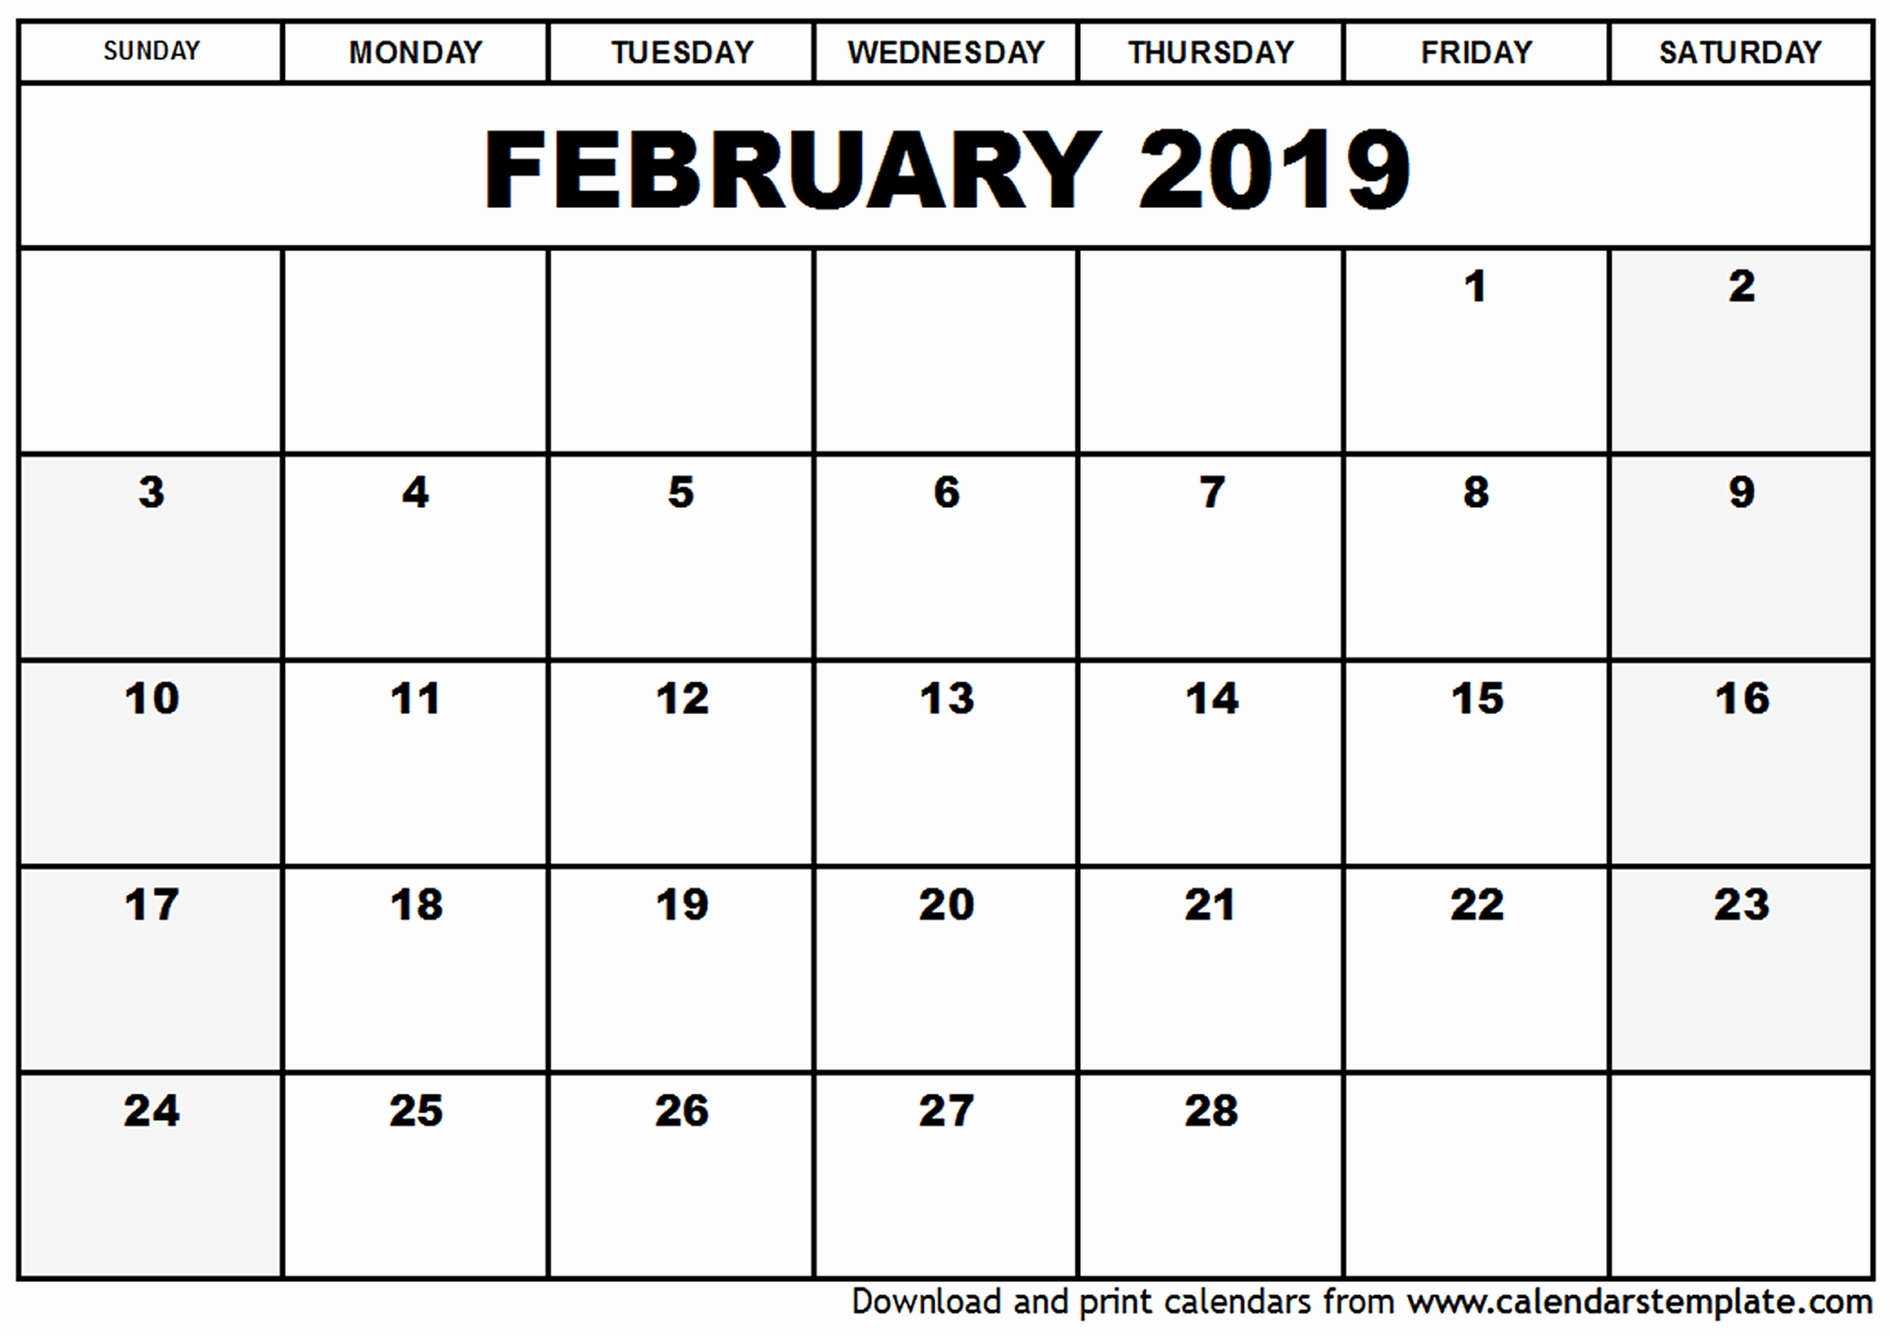 Free Printable Monthly Calendar 2019 Template February 2019 Calendar intended for Free Editable Printable Monthly Calendar